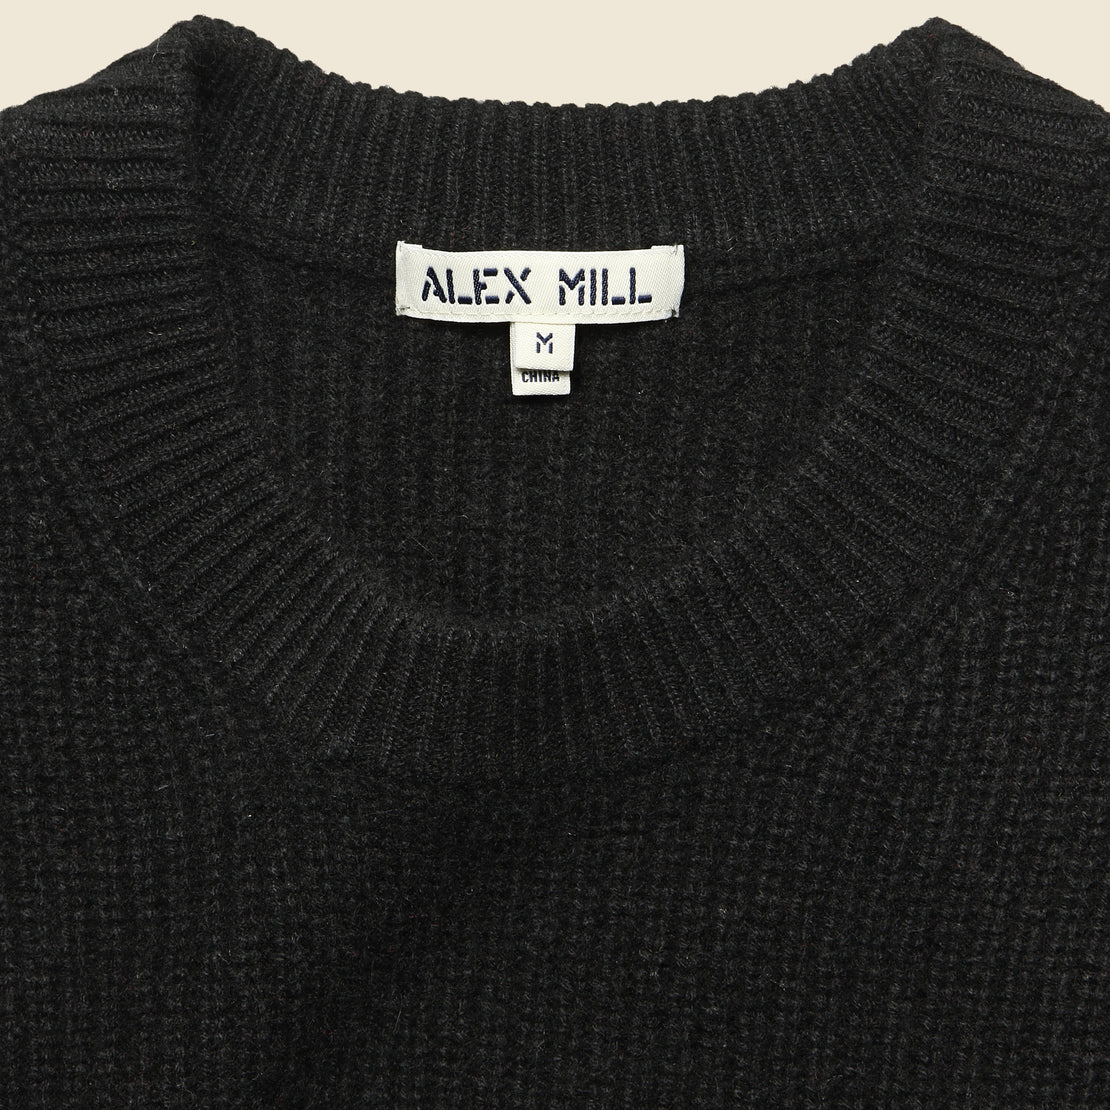 Cashmere Jordan Sweater - Black - Alex Mill - STAG Provisions - Tops - Sweater